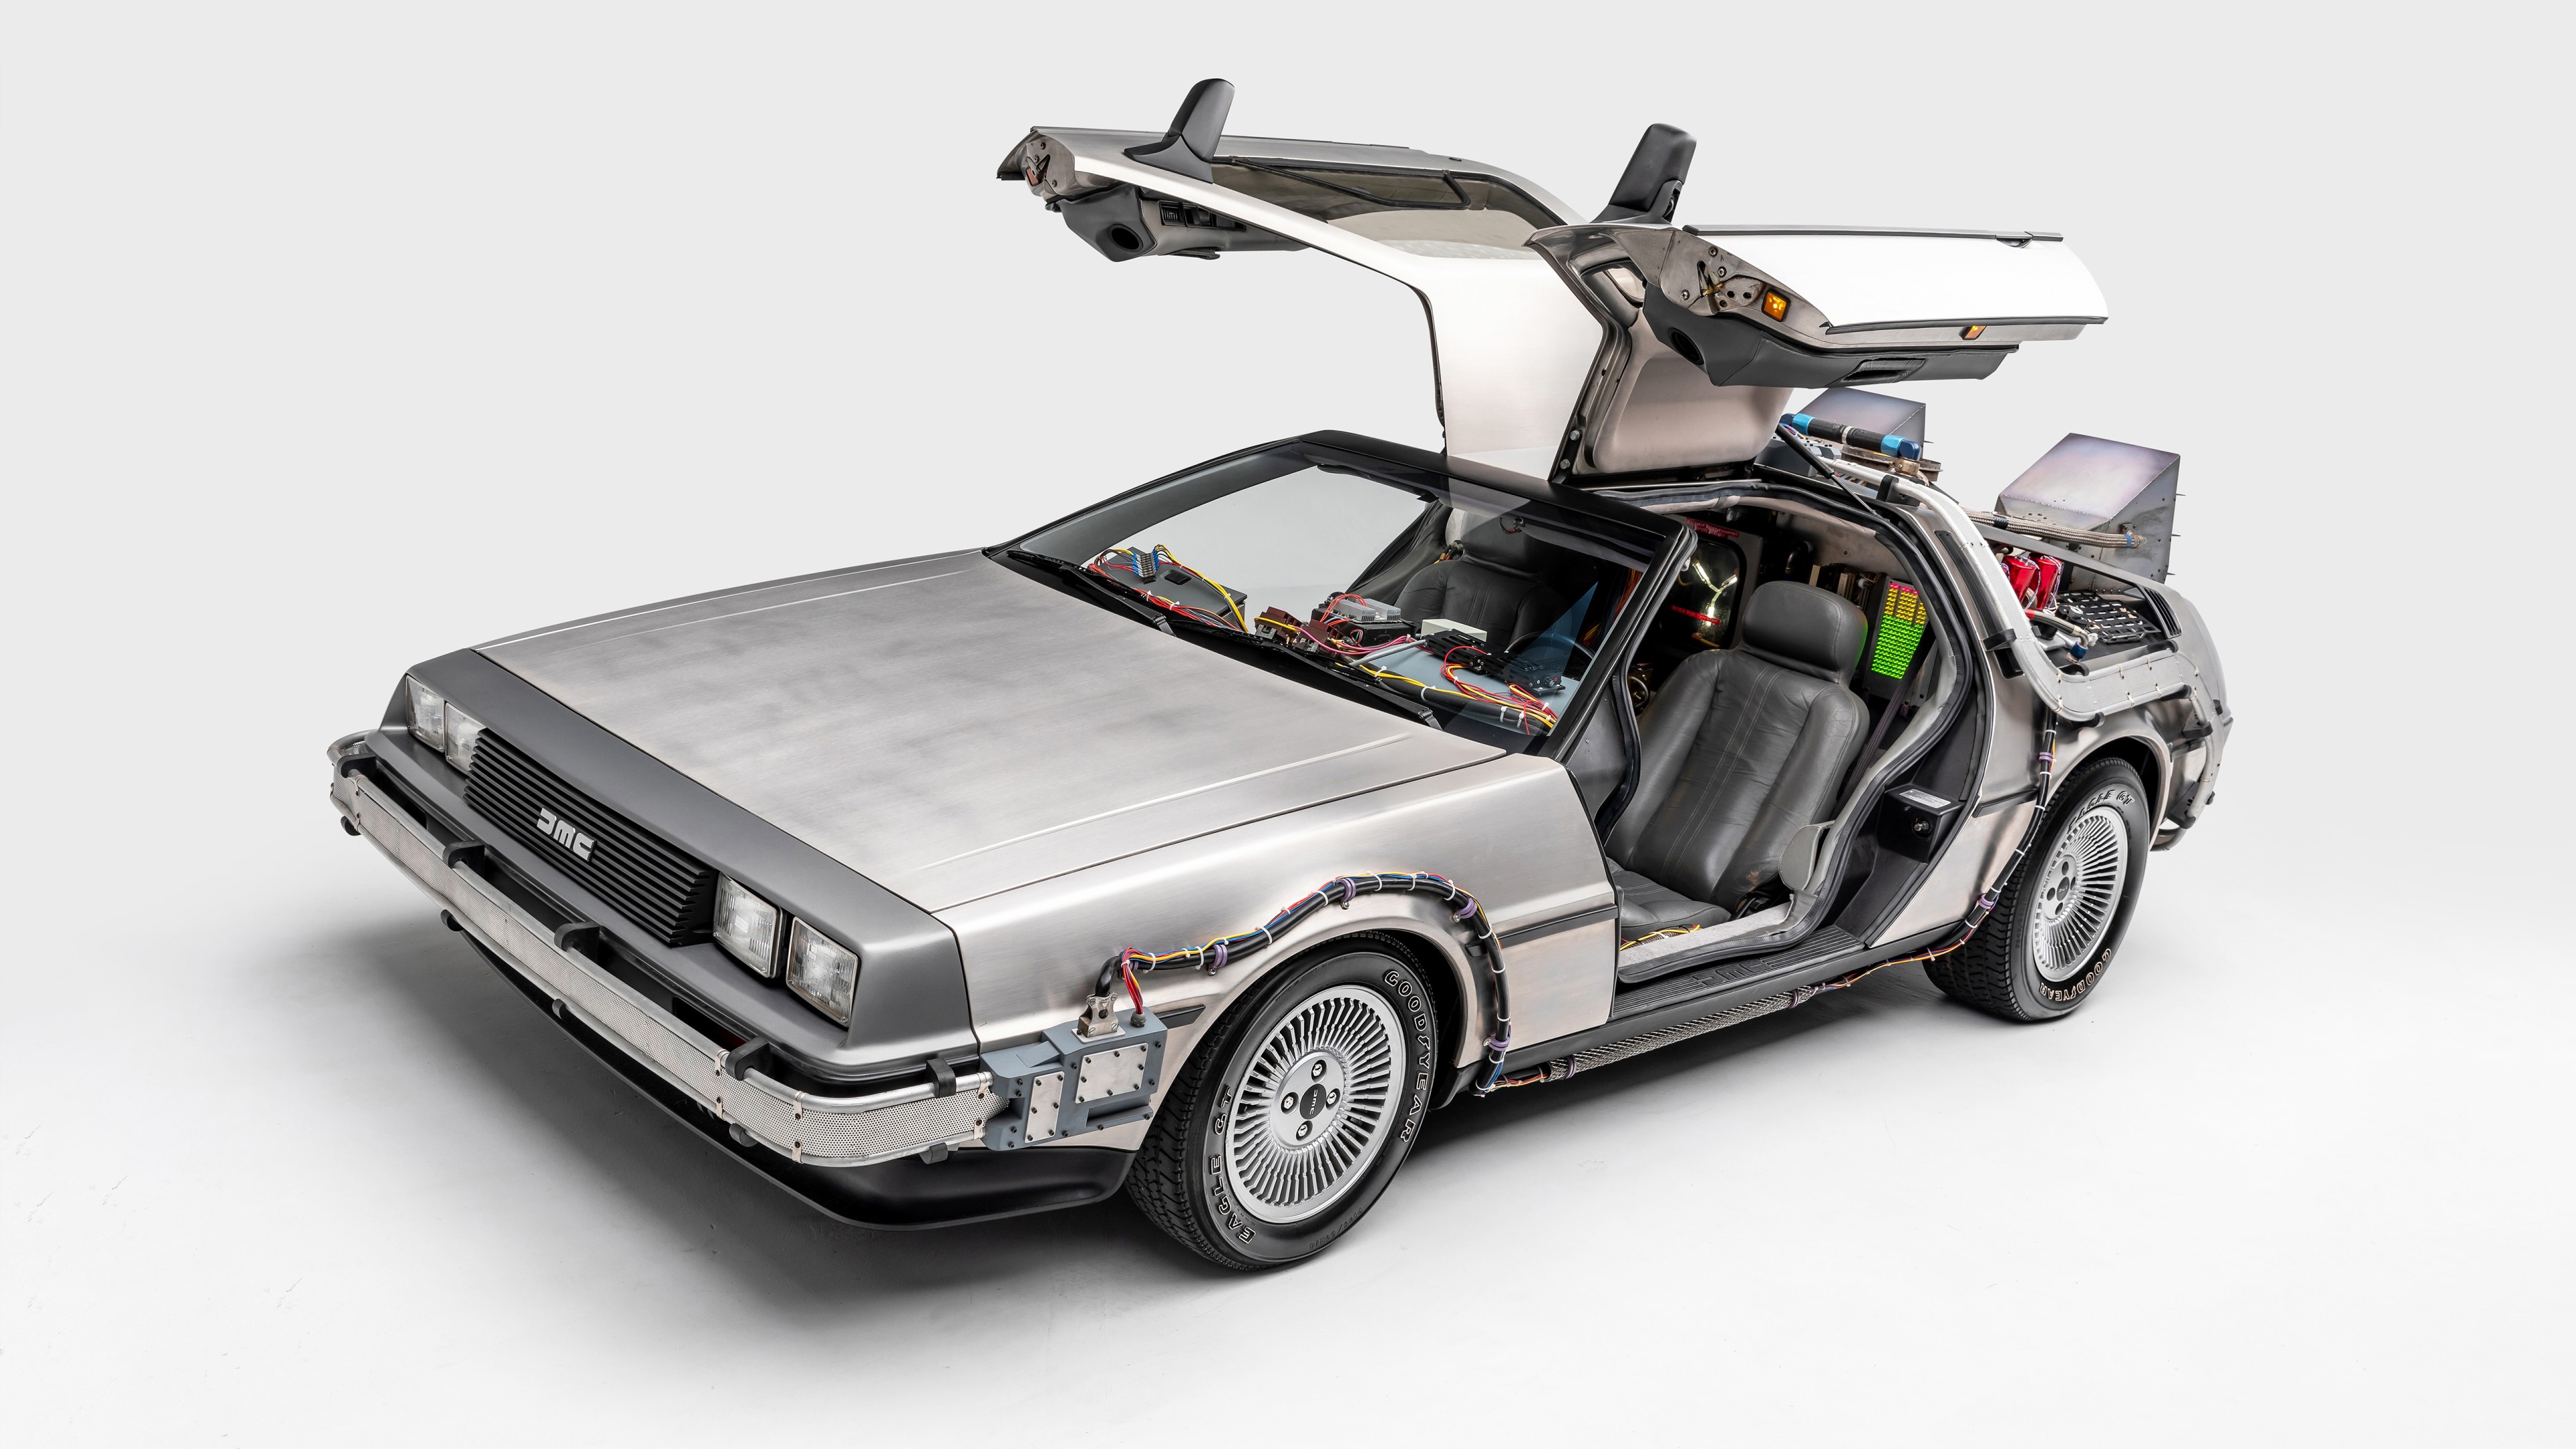 DeLorean DMC-12 Back to the Future 4K 2 Wallpaper | HD Car Wallpapers ...